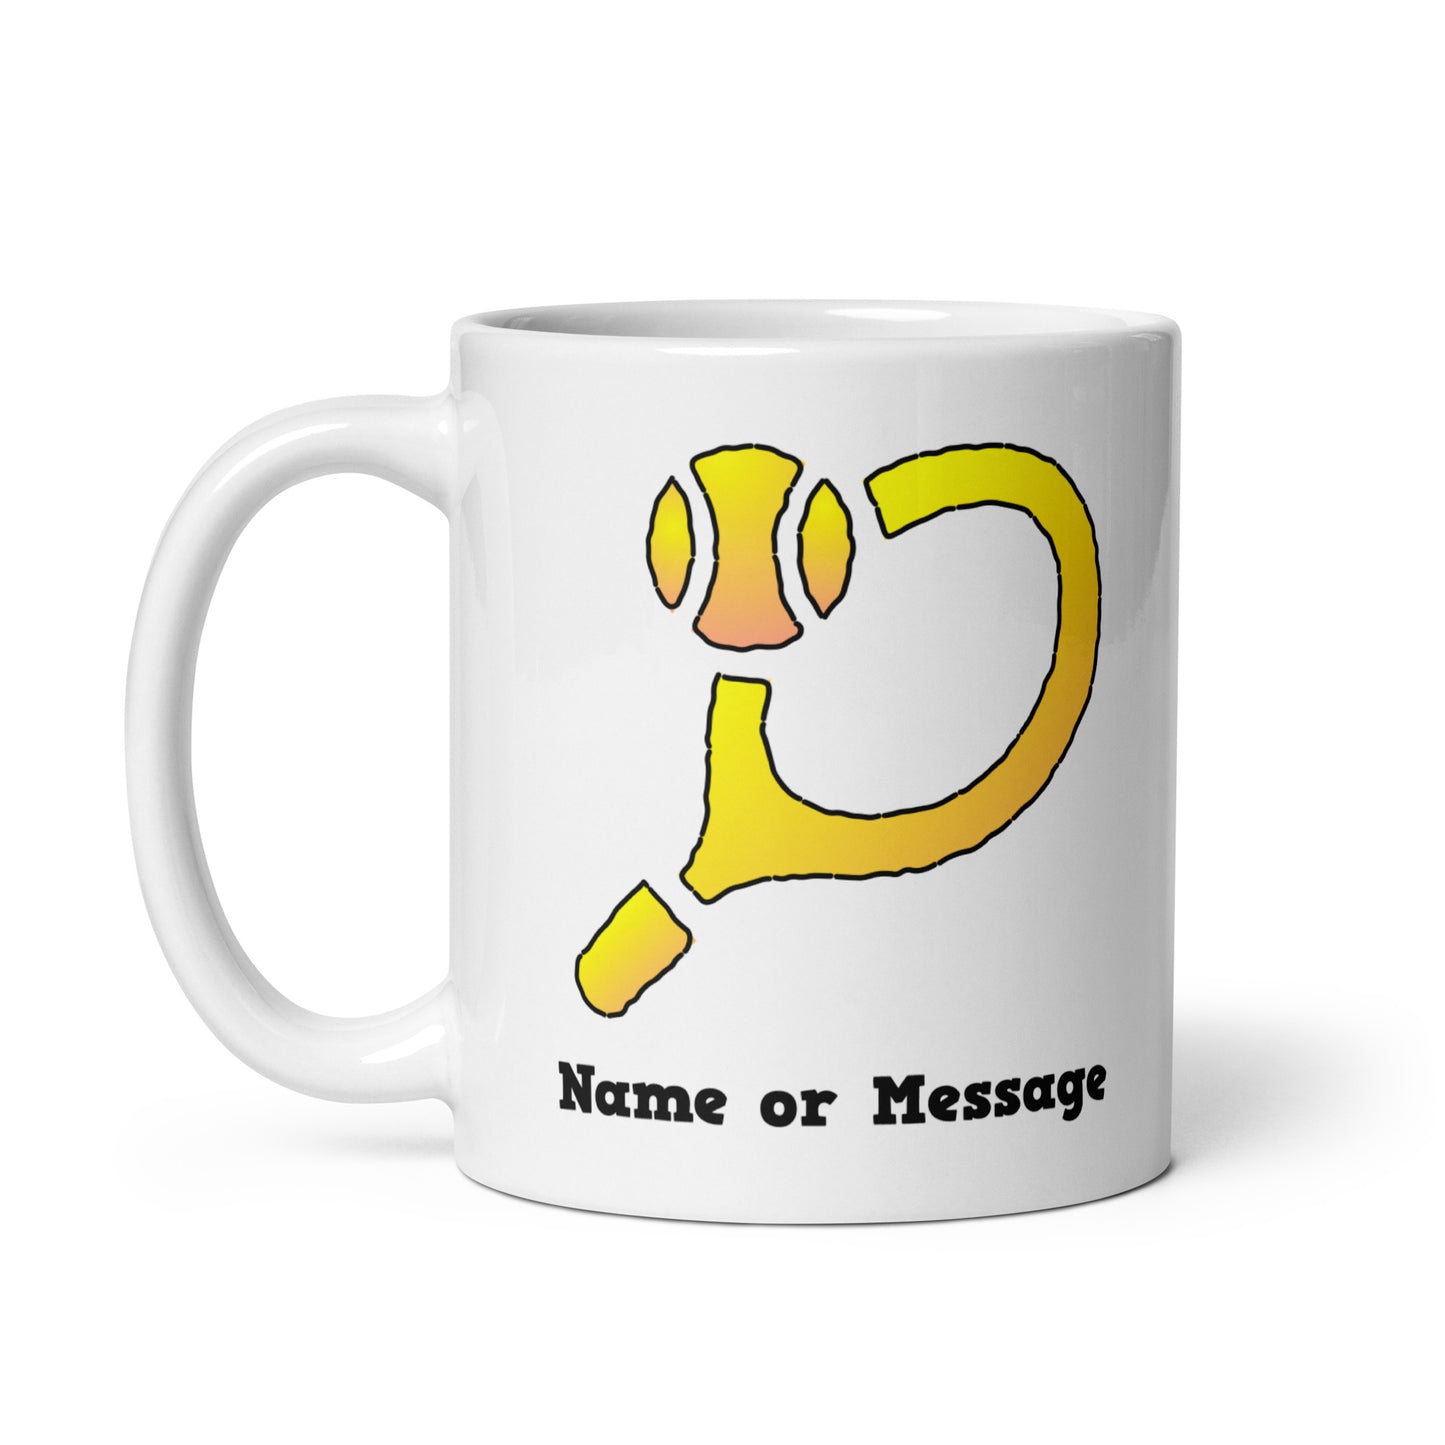 Personalized Yellow Tennis Racket And Ball Mug